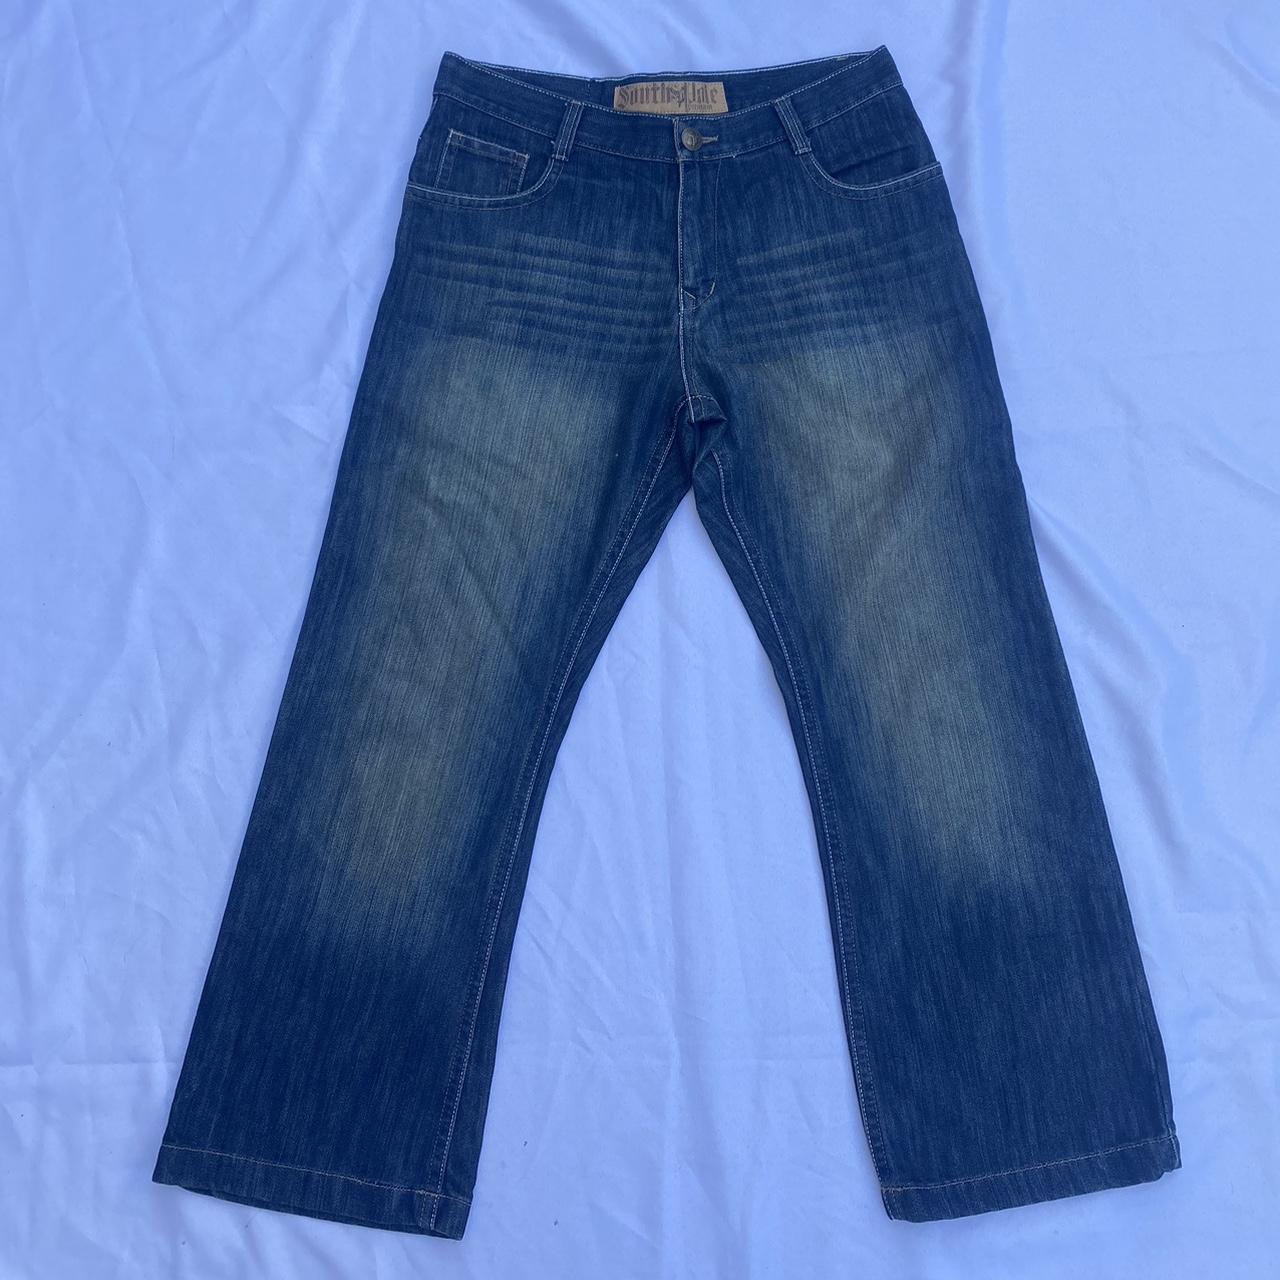 Southpole Men's Jeans | Depop